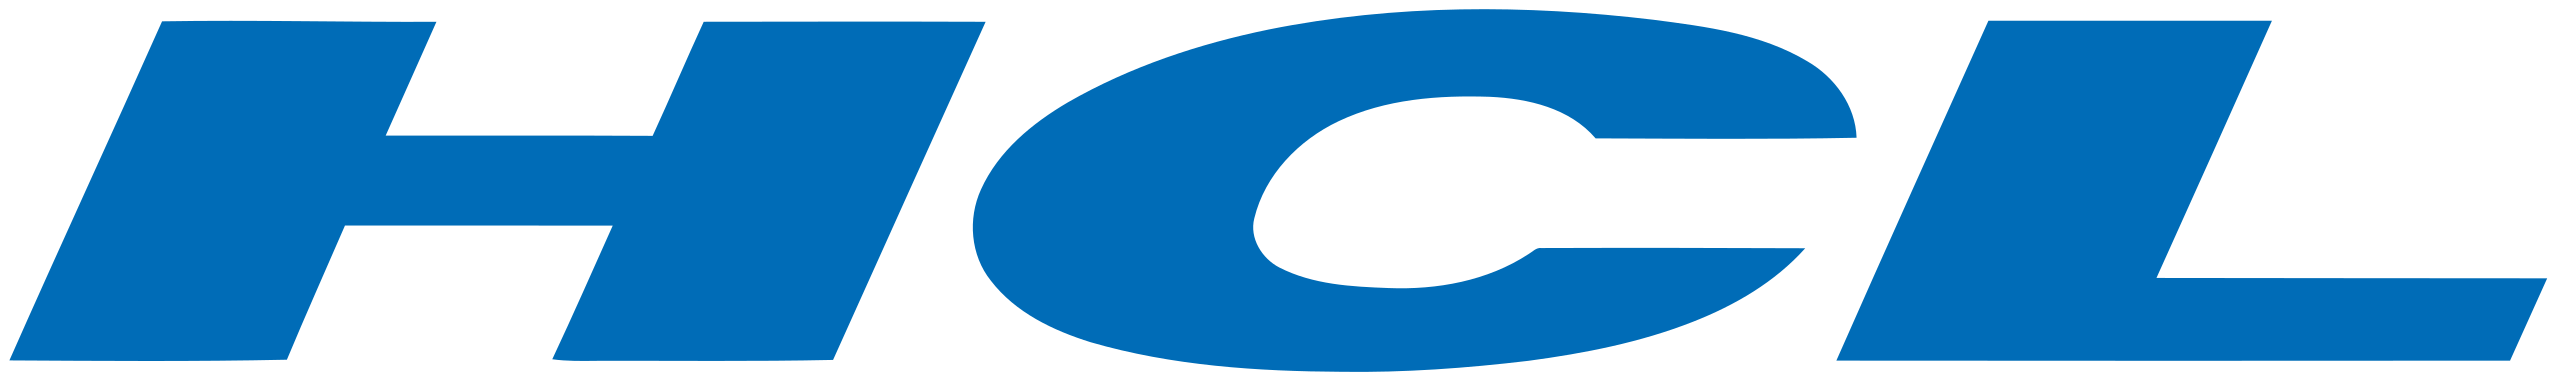 HCL_Technologies_logo_M-ISS